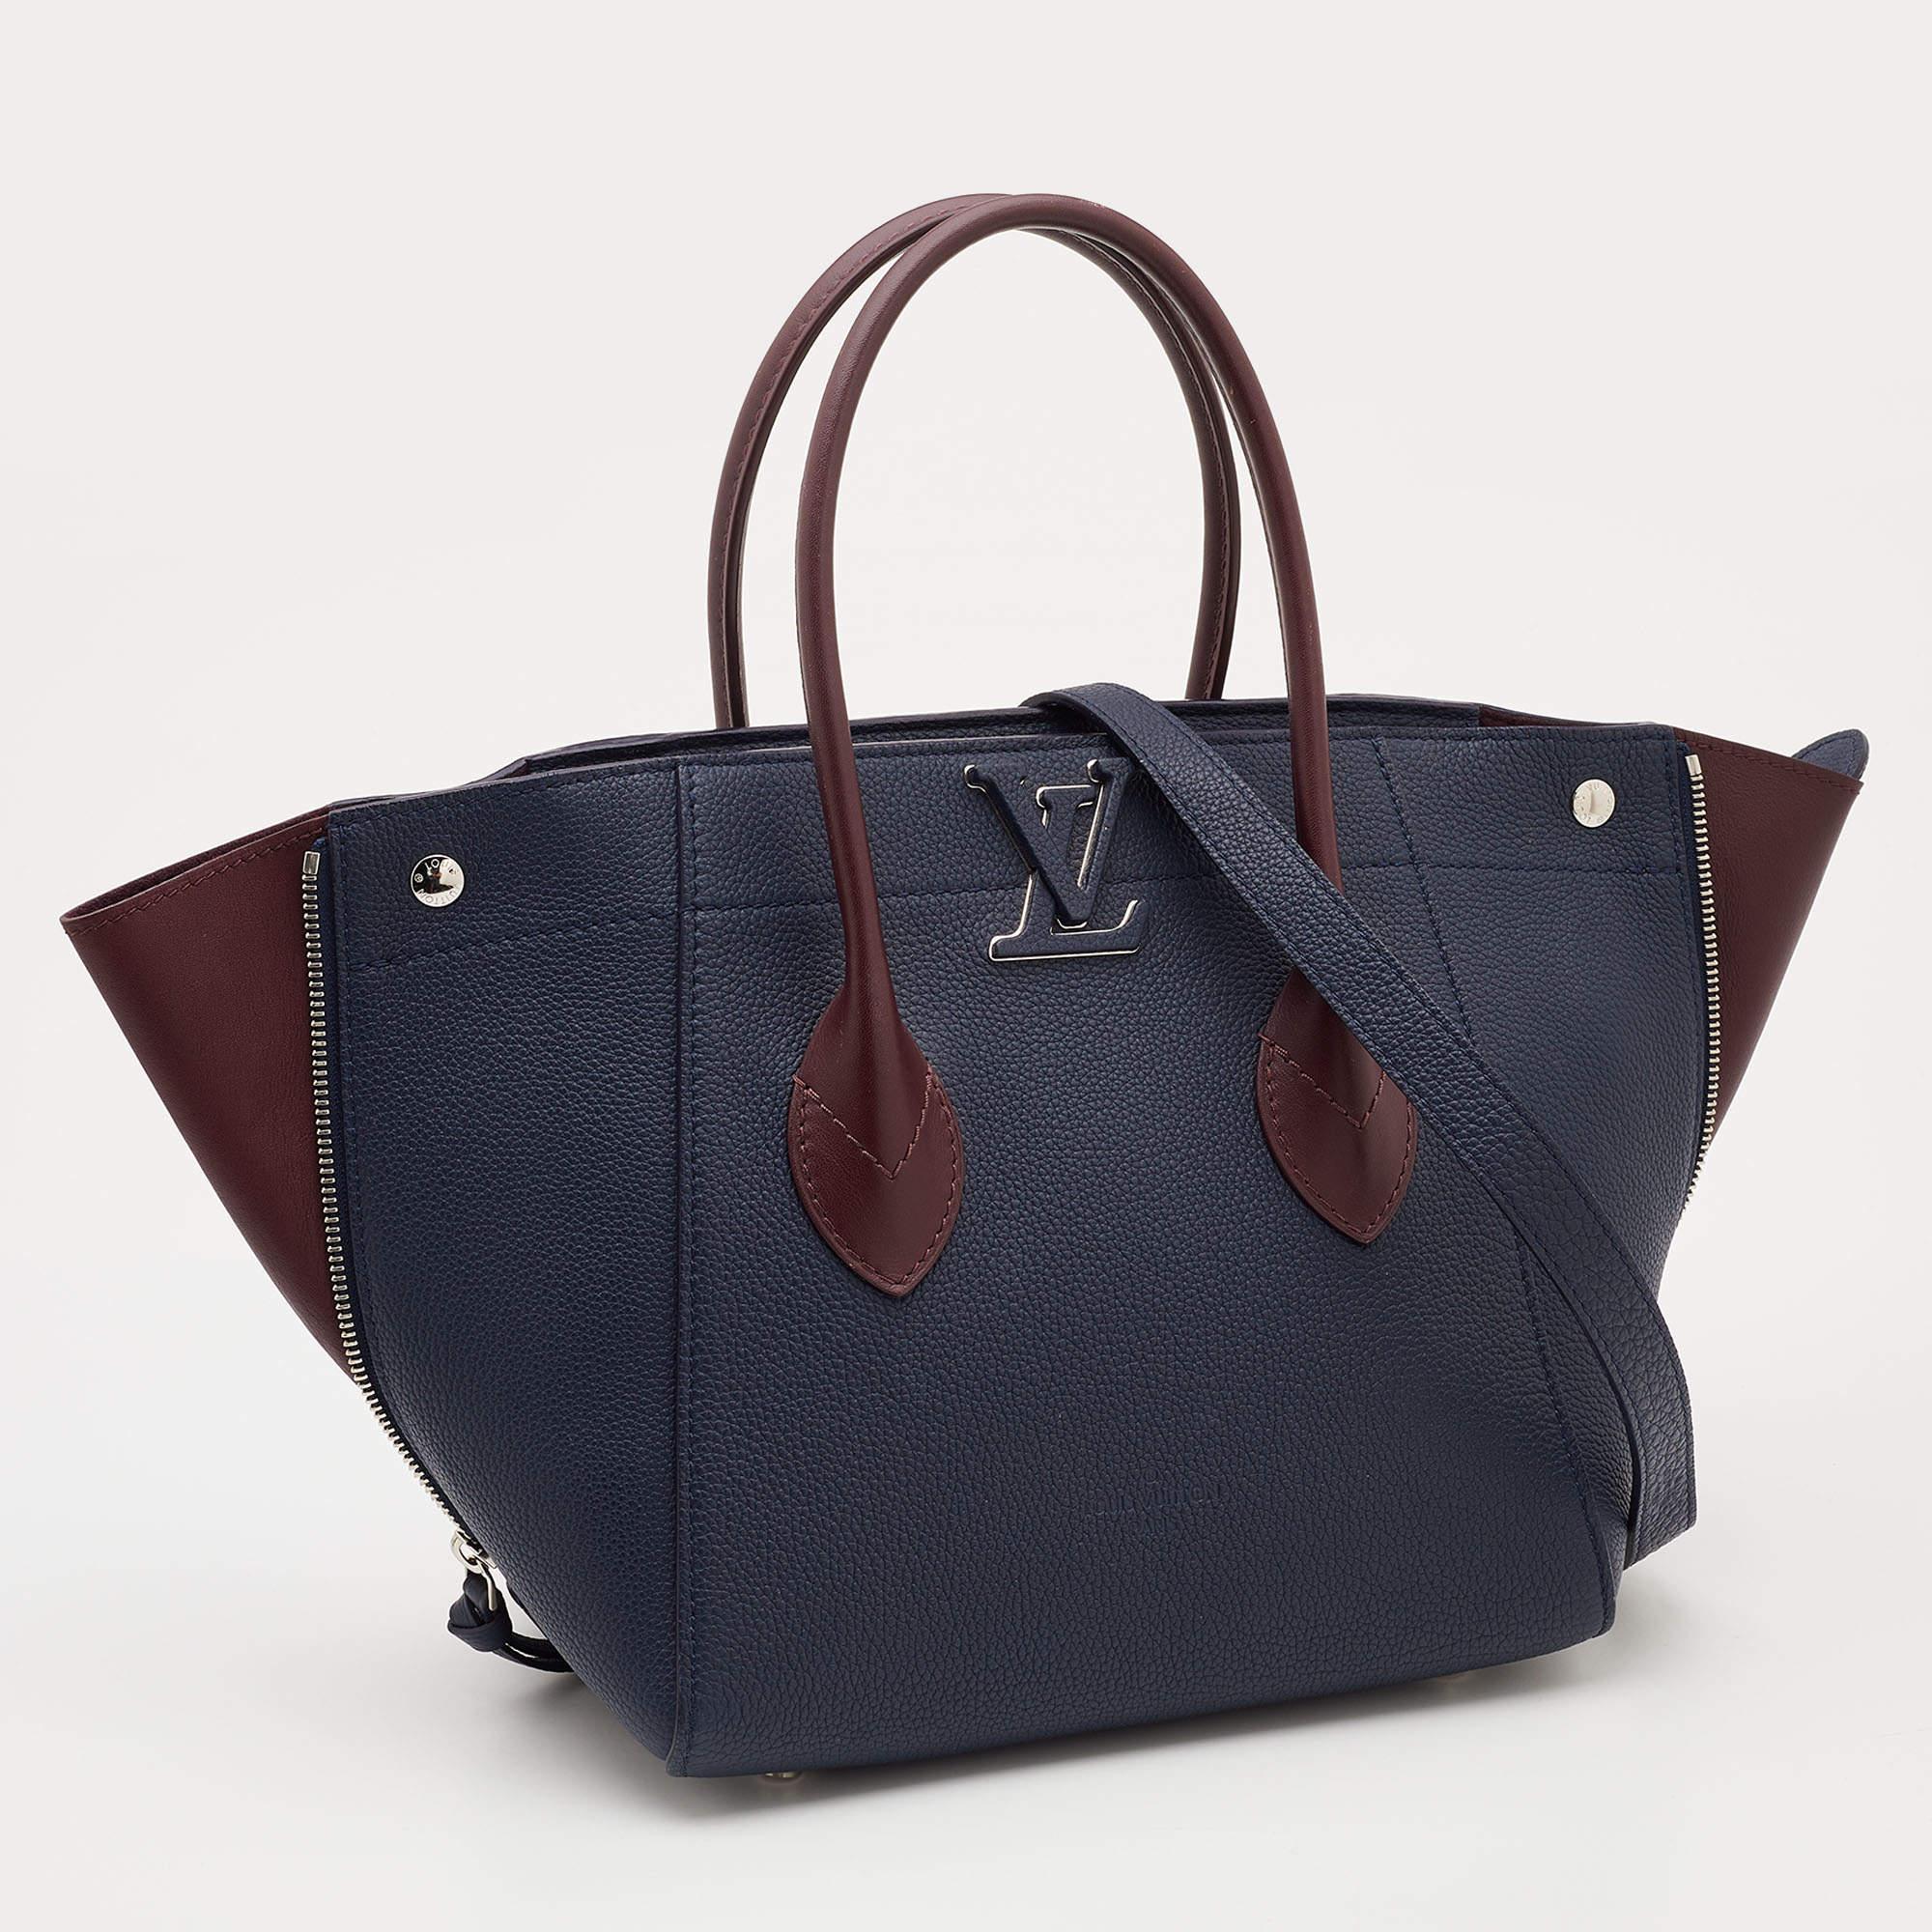 Women's Louis Vuitton Navy Blue/Burgundy Leather Freedom Bag